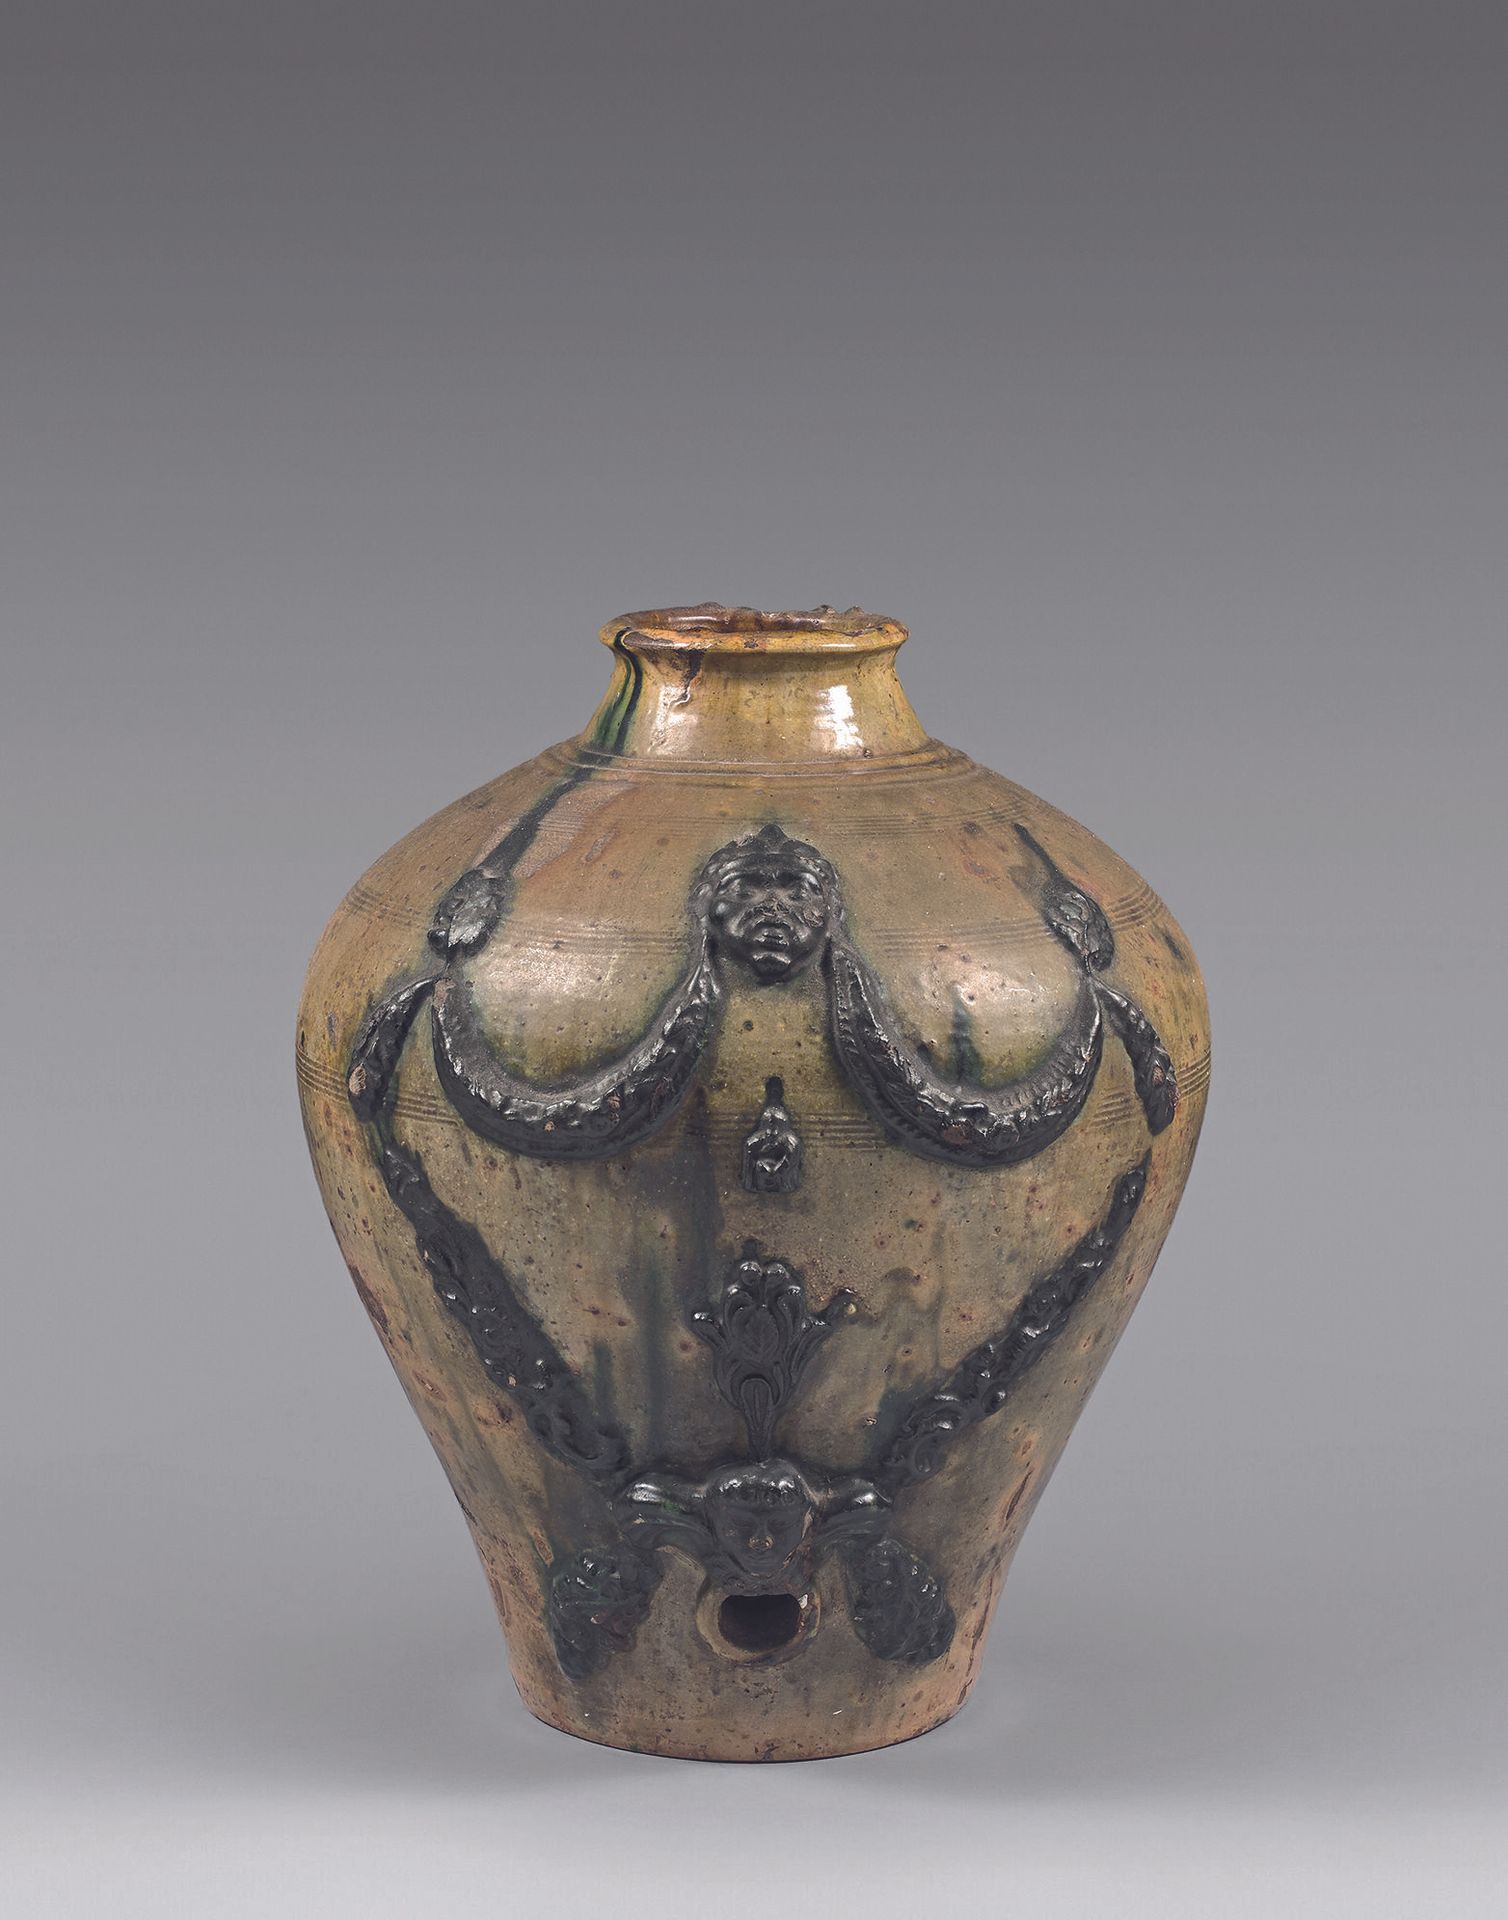 Null MIDI
釉上红陶油壶，黄绿色背景上有面具和花环的浮雕装饰。
18世纪末-19世纪初。
高度：45厘米